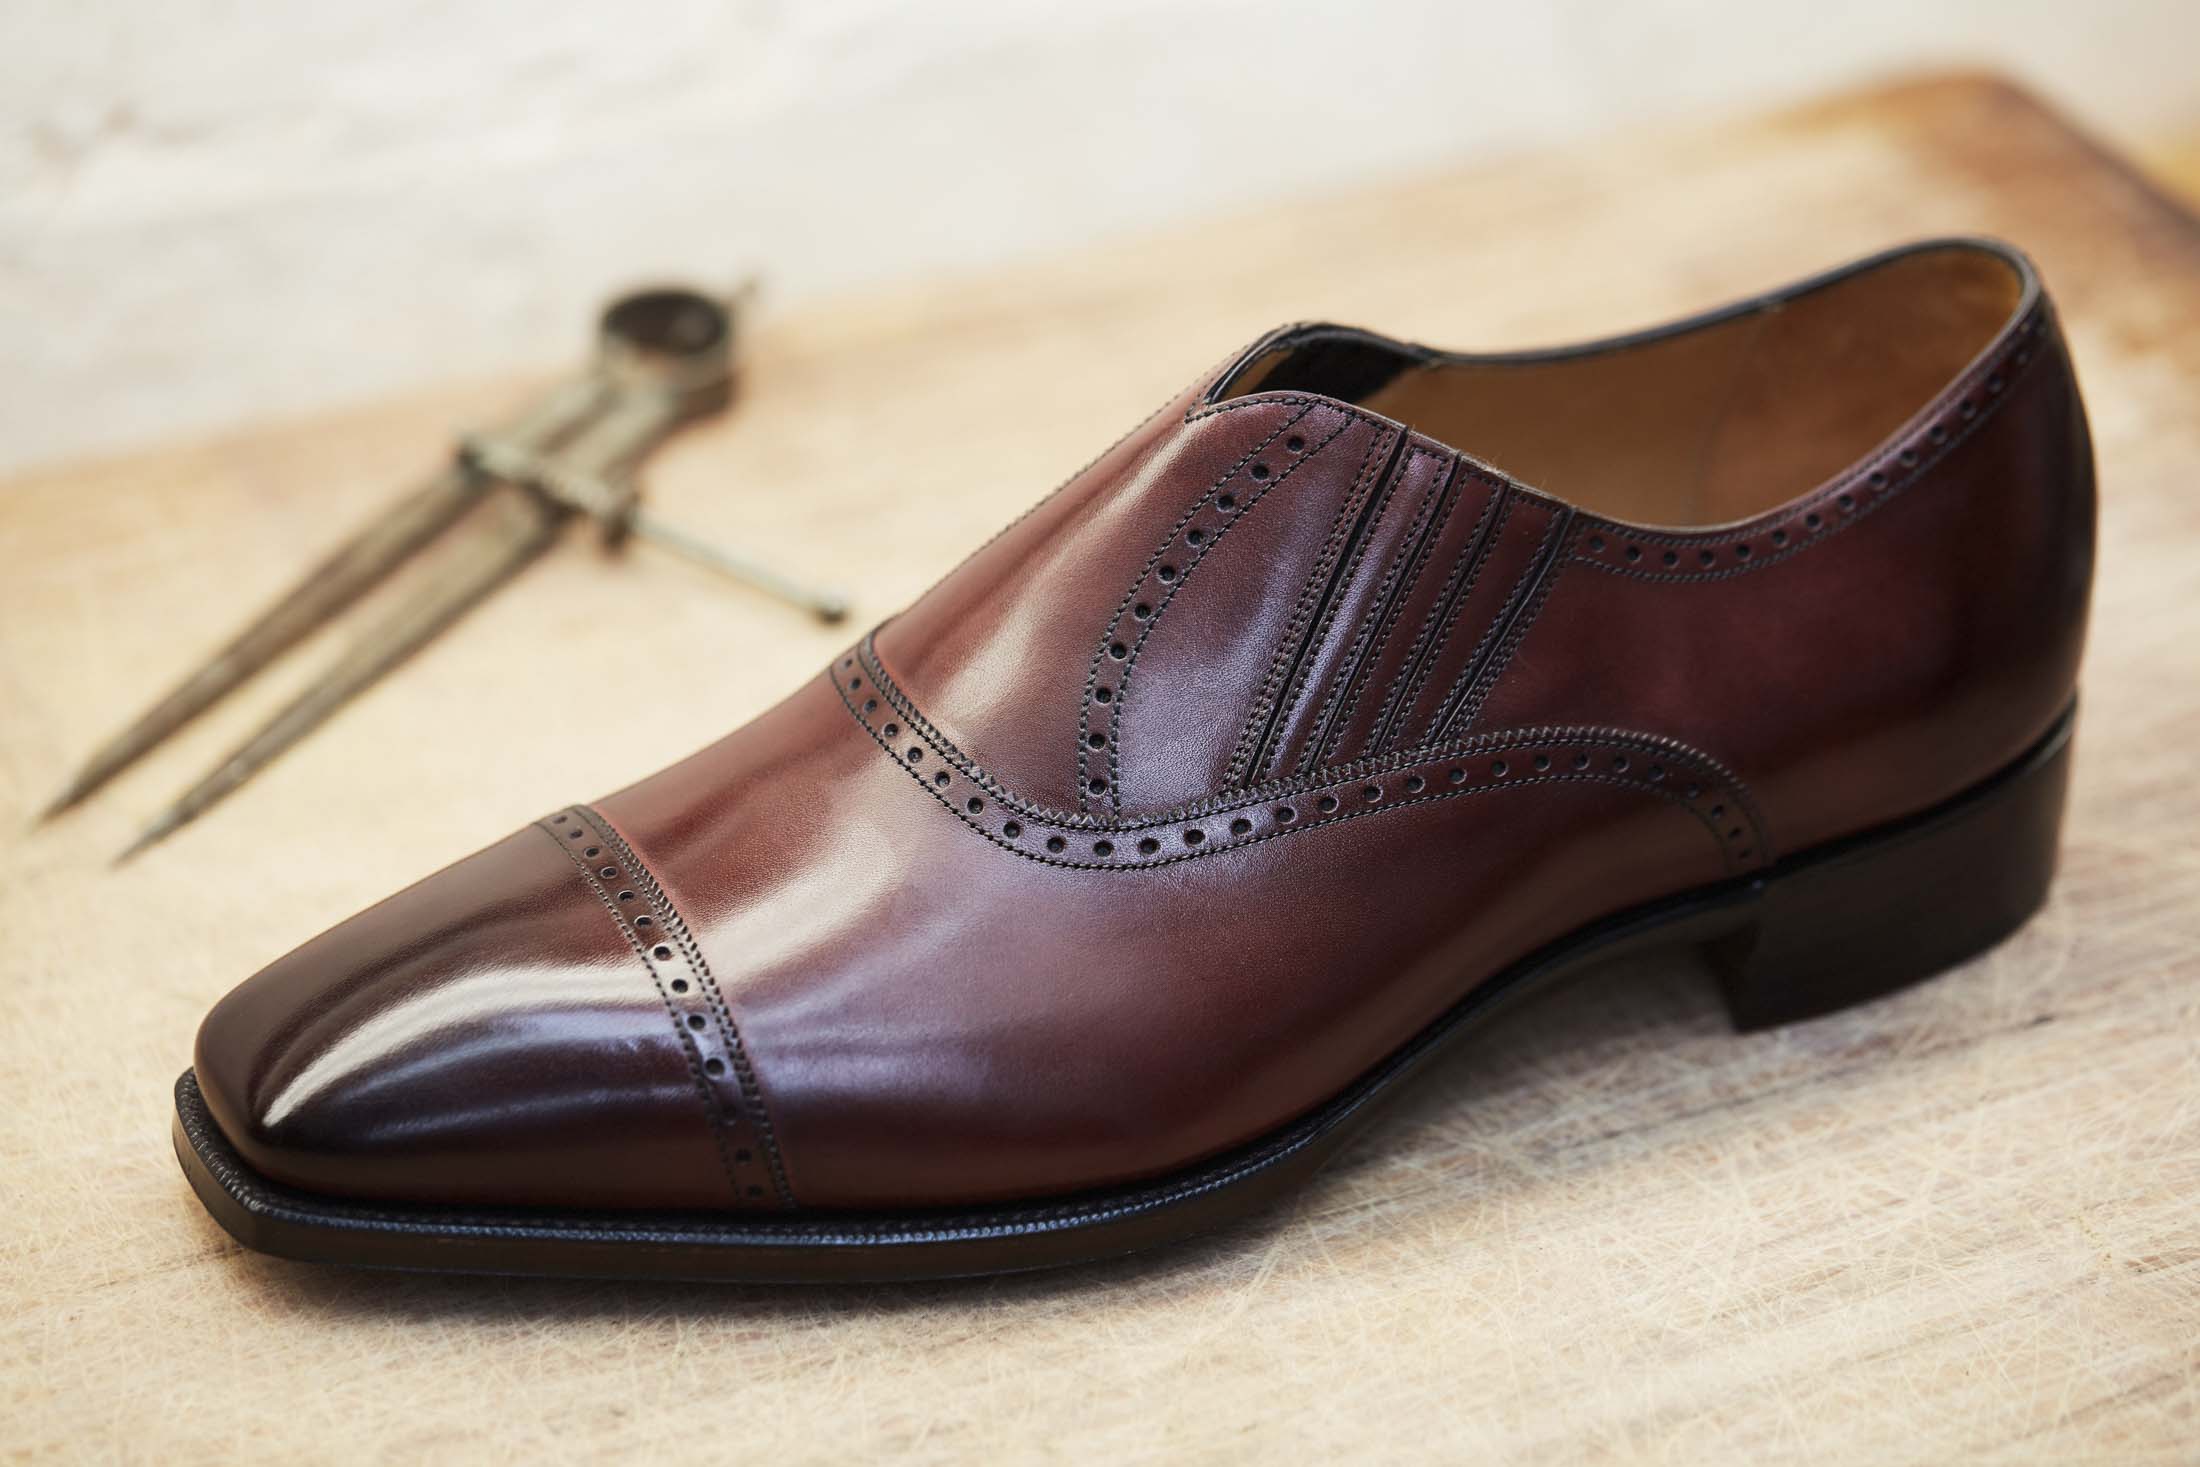 Ermenegildo Zegna Bespoke Shoe Collection Now at London Store - Bloomberg